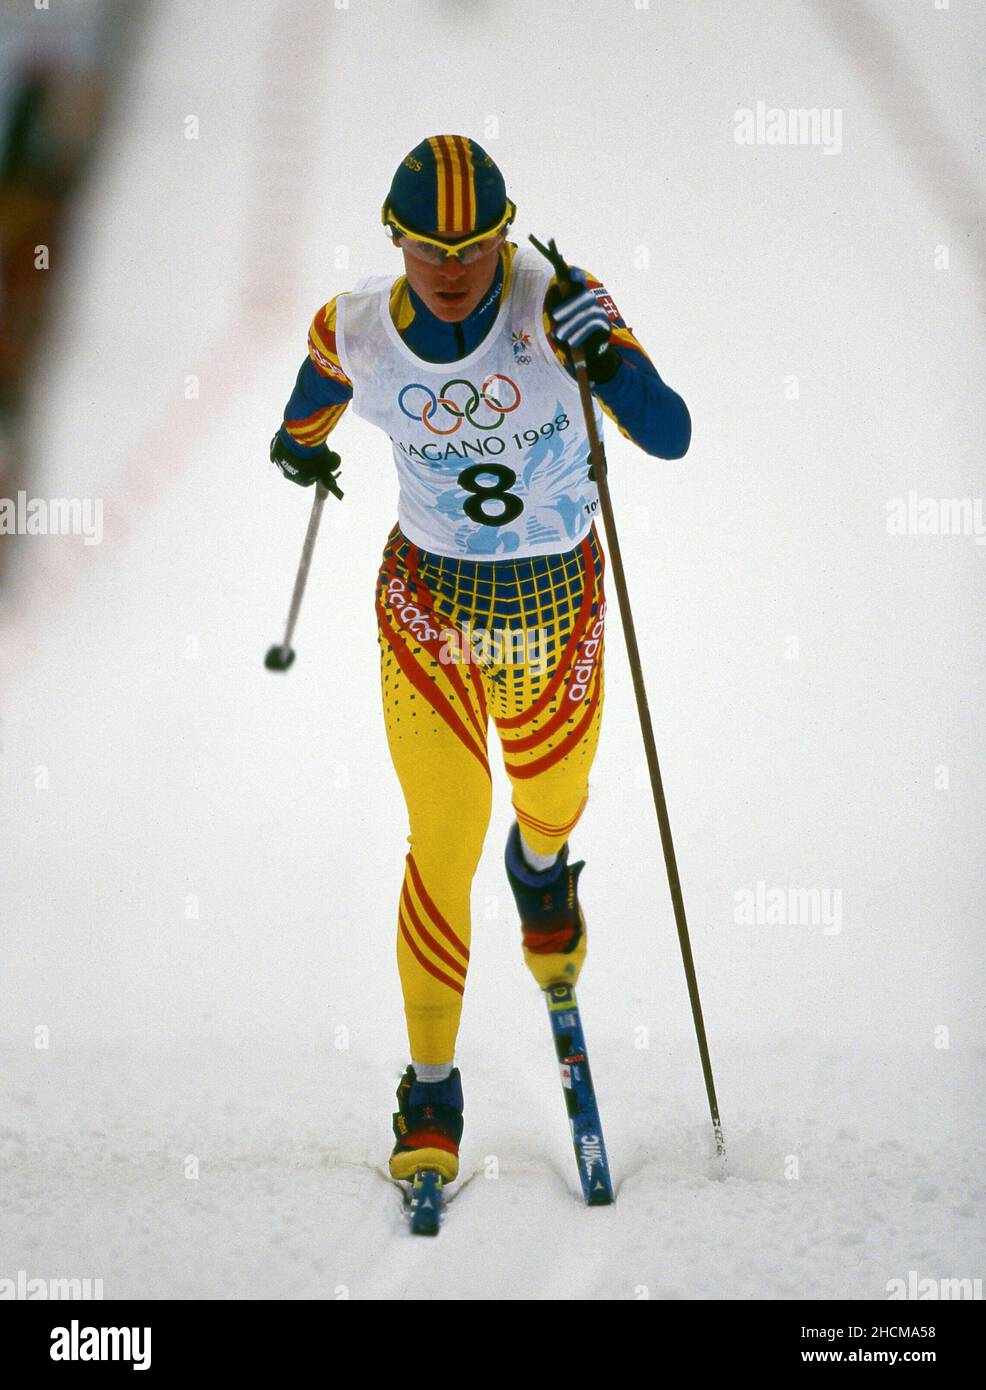 Primo: Sport, Olimpiadi invernali, Olimpiadi, 1998 Nagano, Giappone, Giochi olimpici invernali, 98, archivio immagini uomini, uomini, sci, Sci di fondo, 10 KM, 10 km Stanislav Jezik, Slovacchia Foto Stock